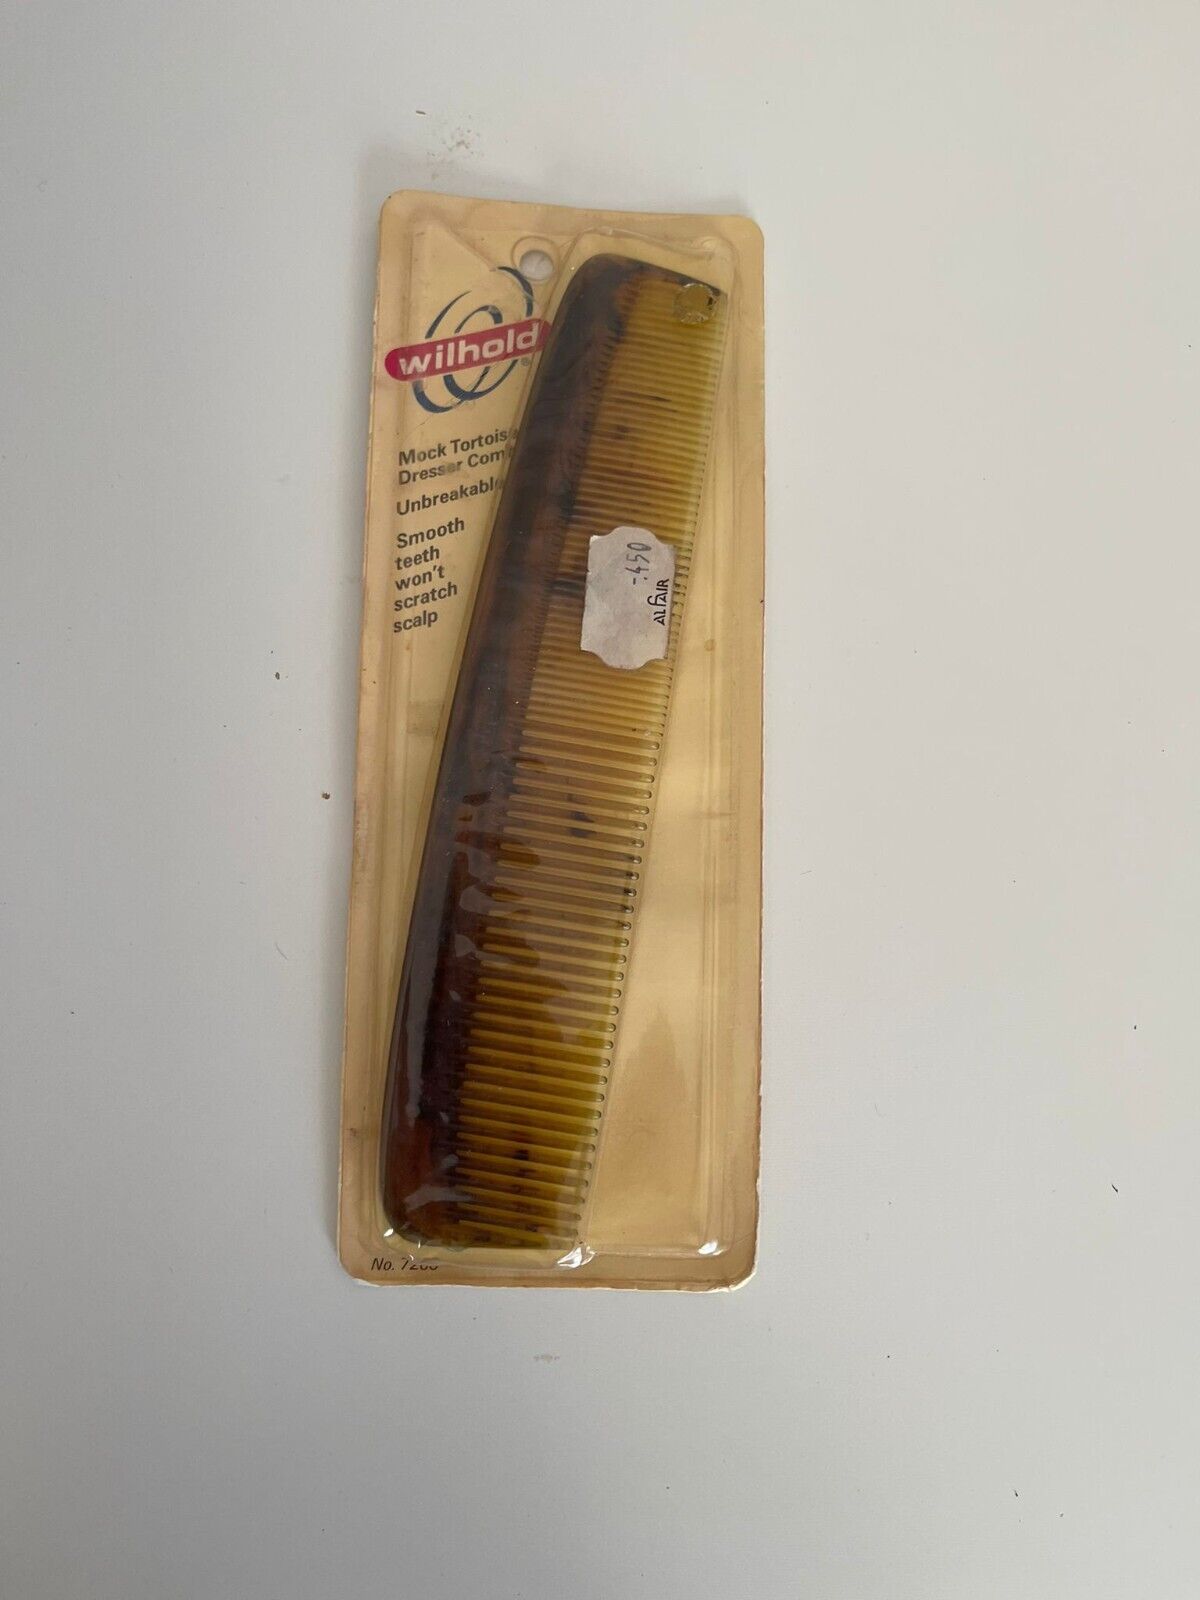 Vintage Wilhold Brown Smooth Teeth Old Stock Hair Comb #17801 New Tortoise